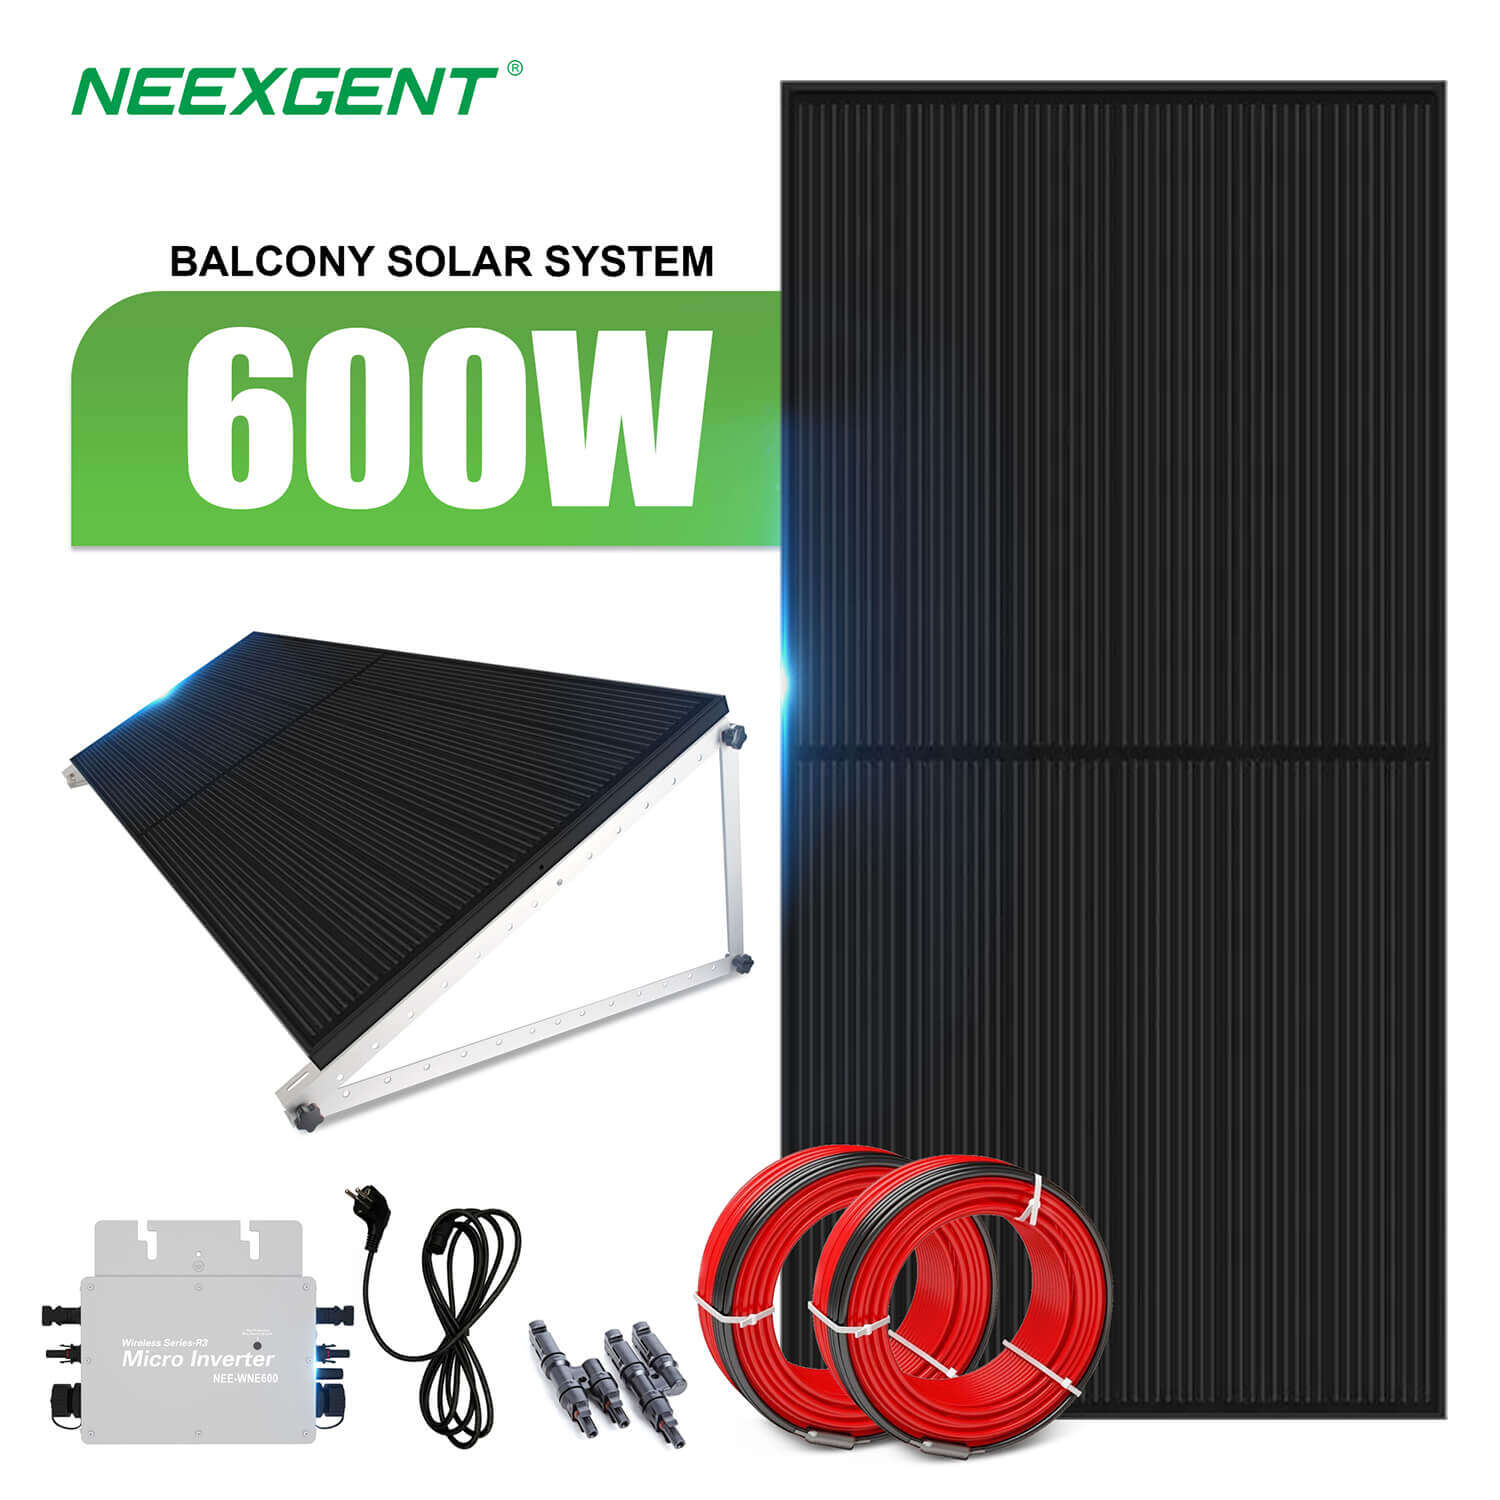 Neexgent 600w Balcony Power Solar System Pv Kits Micro Inverter With Flexible Solar Panels